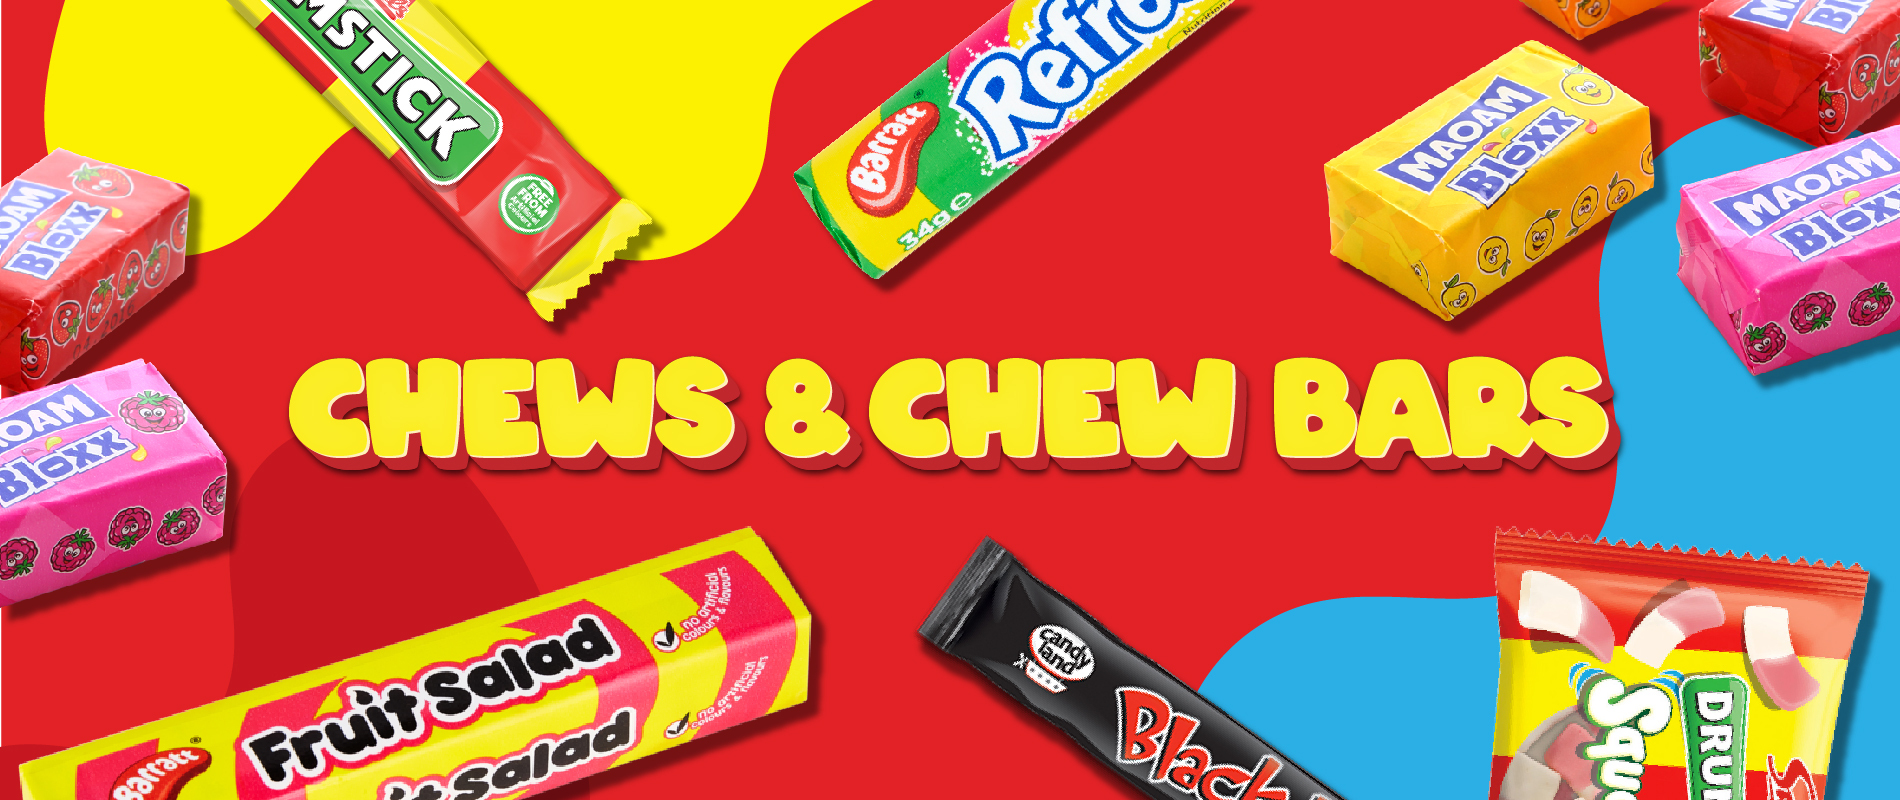 Chews & Chew Bars